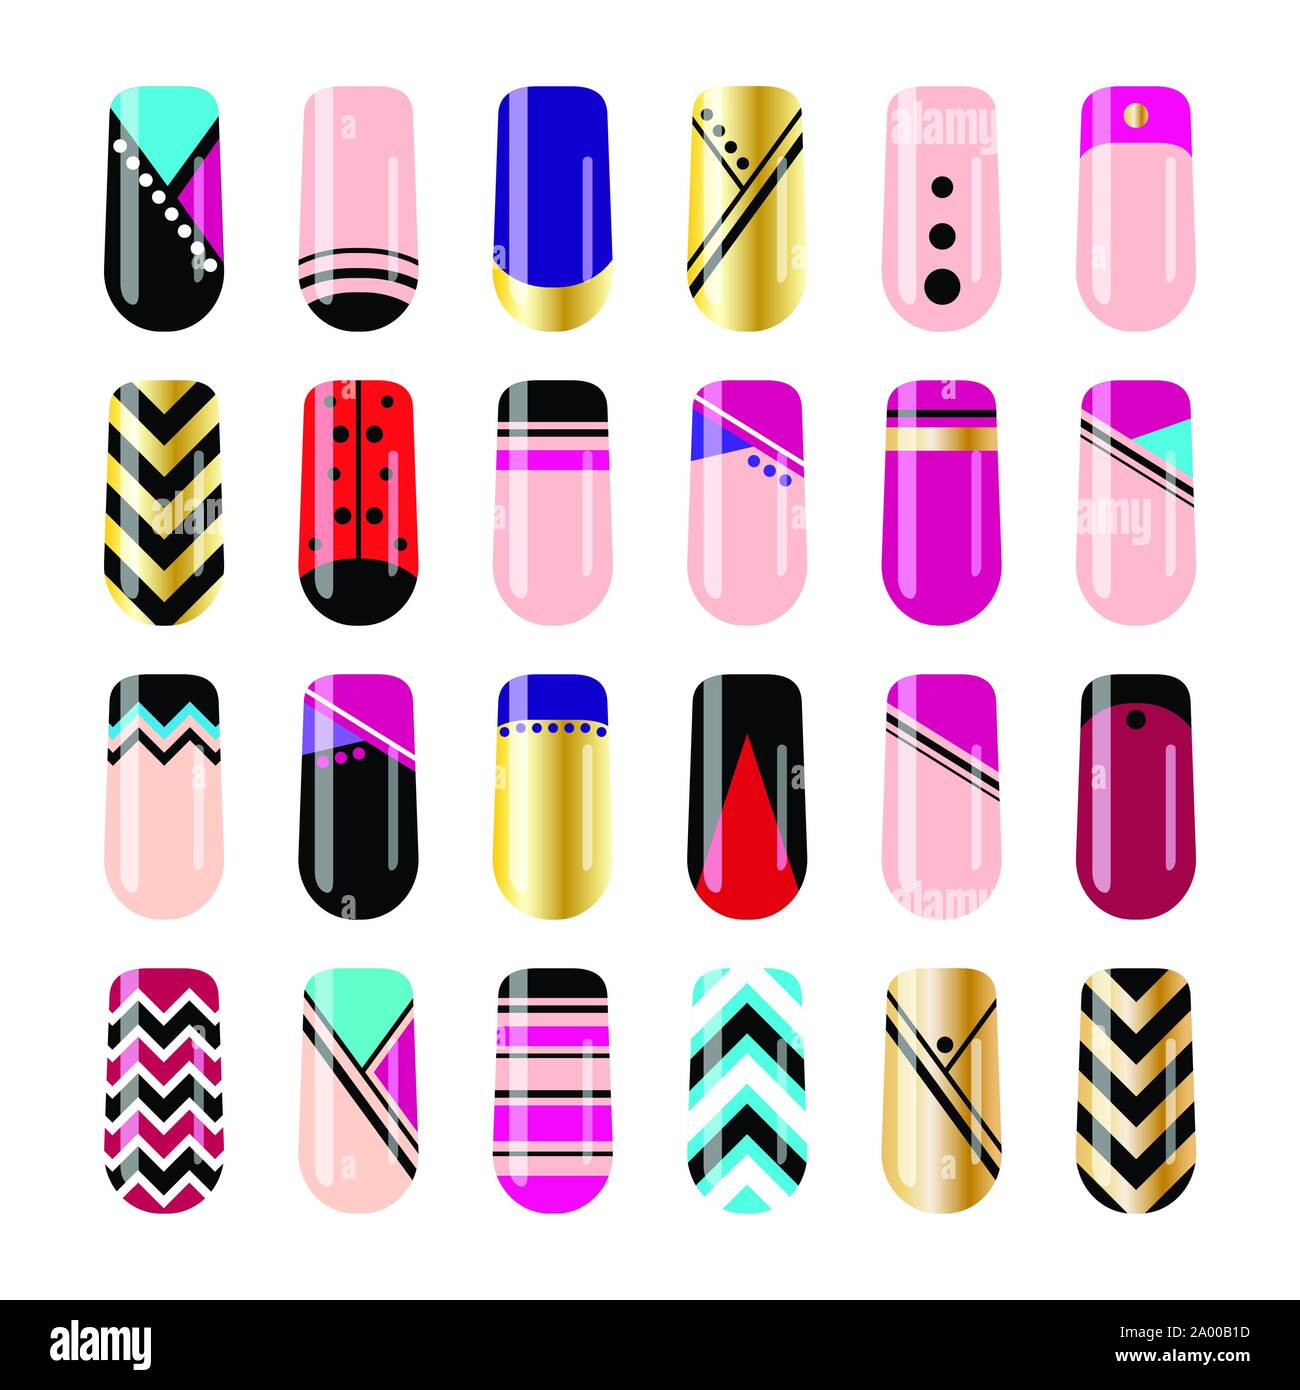 Nail art design. Geometric nail stickers template Stock Vector